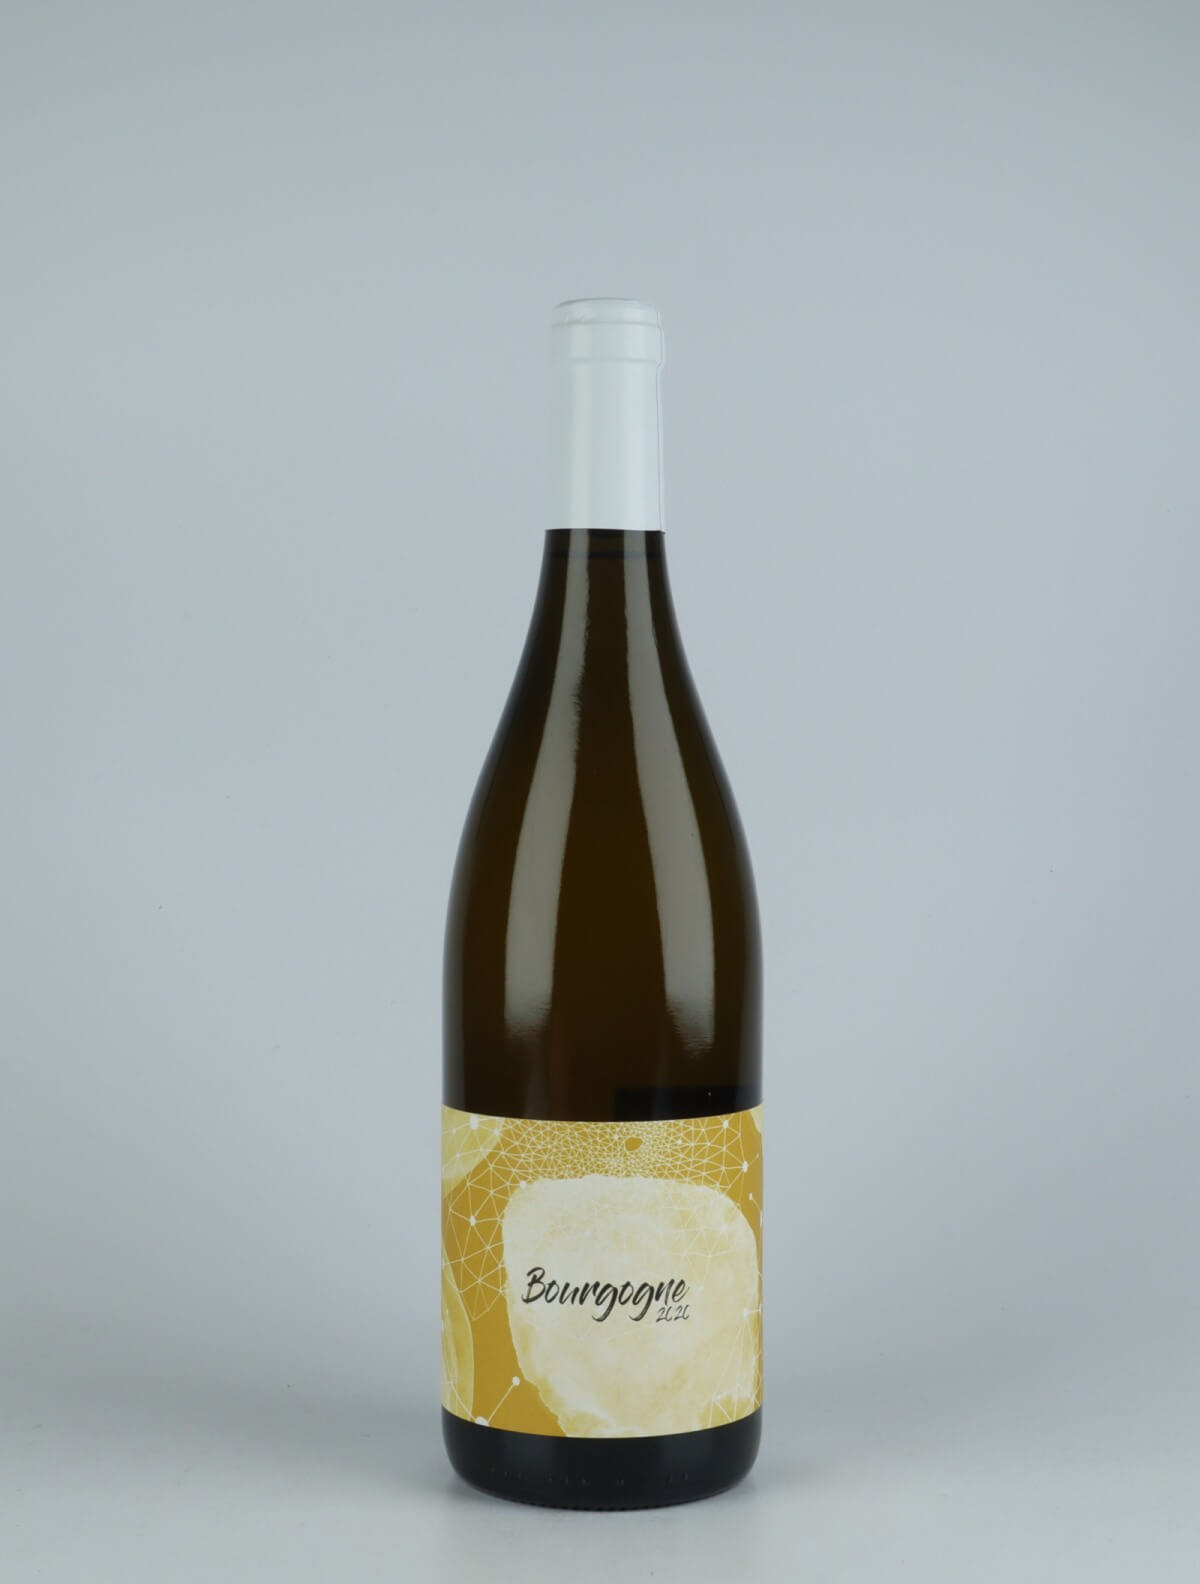 En flaske 2020 Bourgogne Blanc Hvidvin fra Domaine Didon, Bourgogne i Frankrig